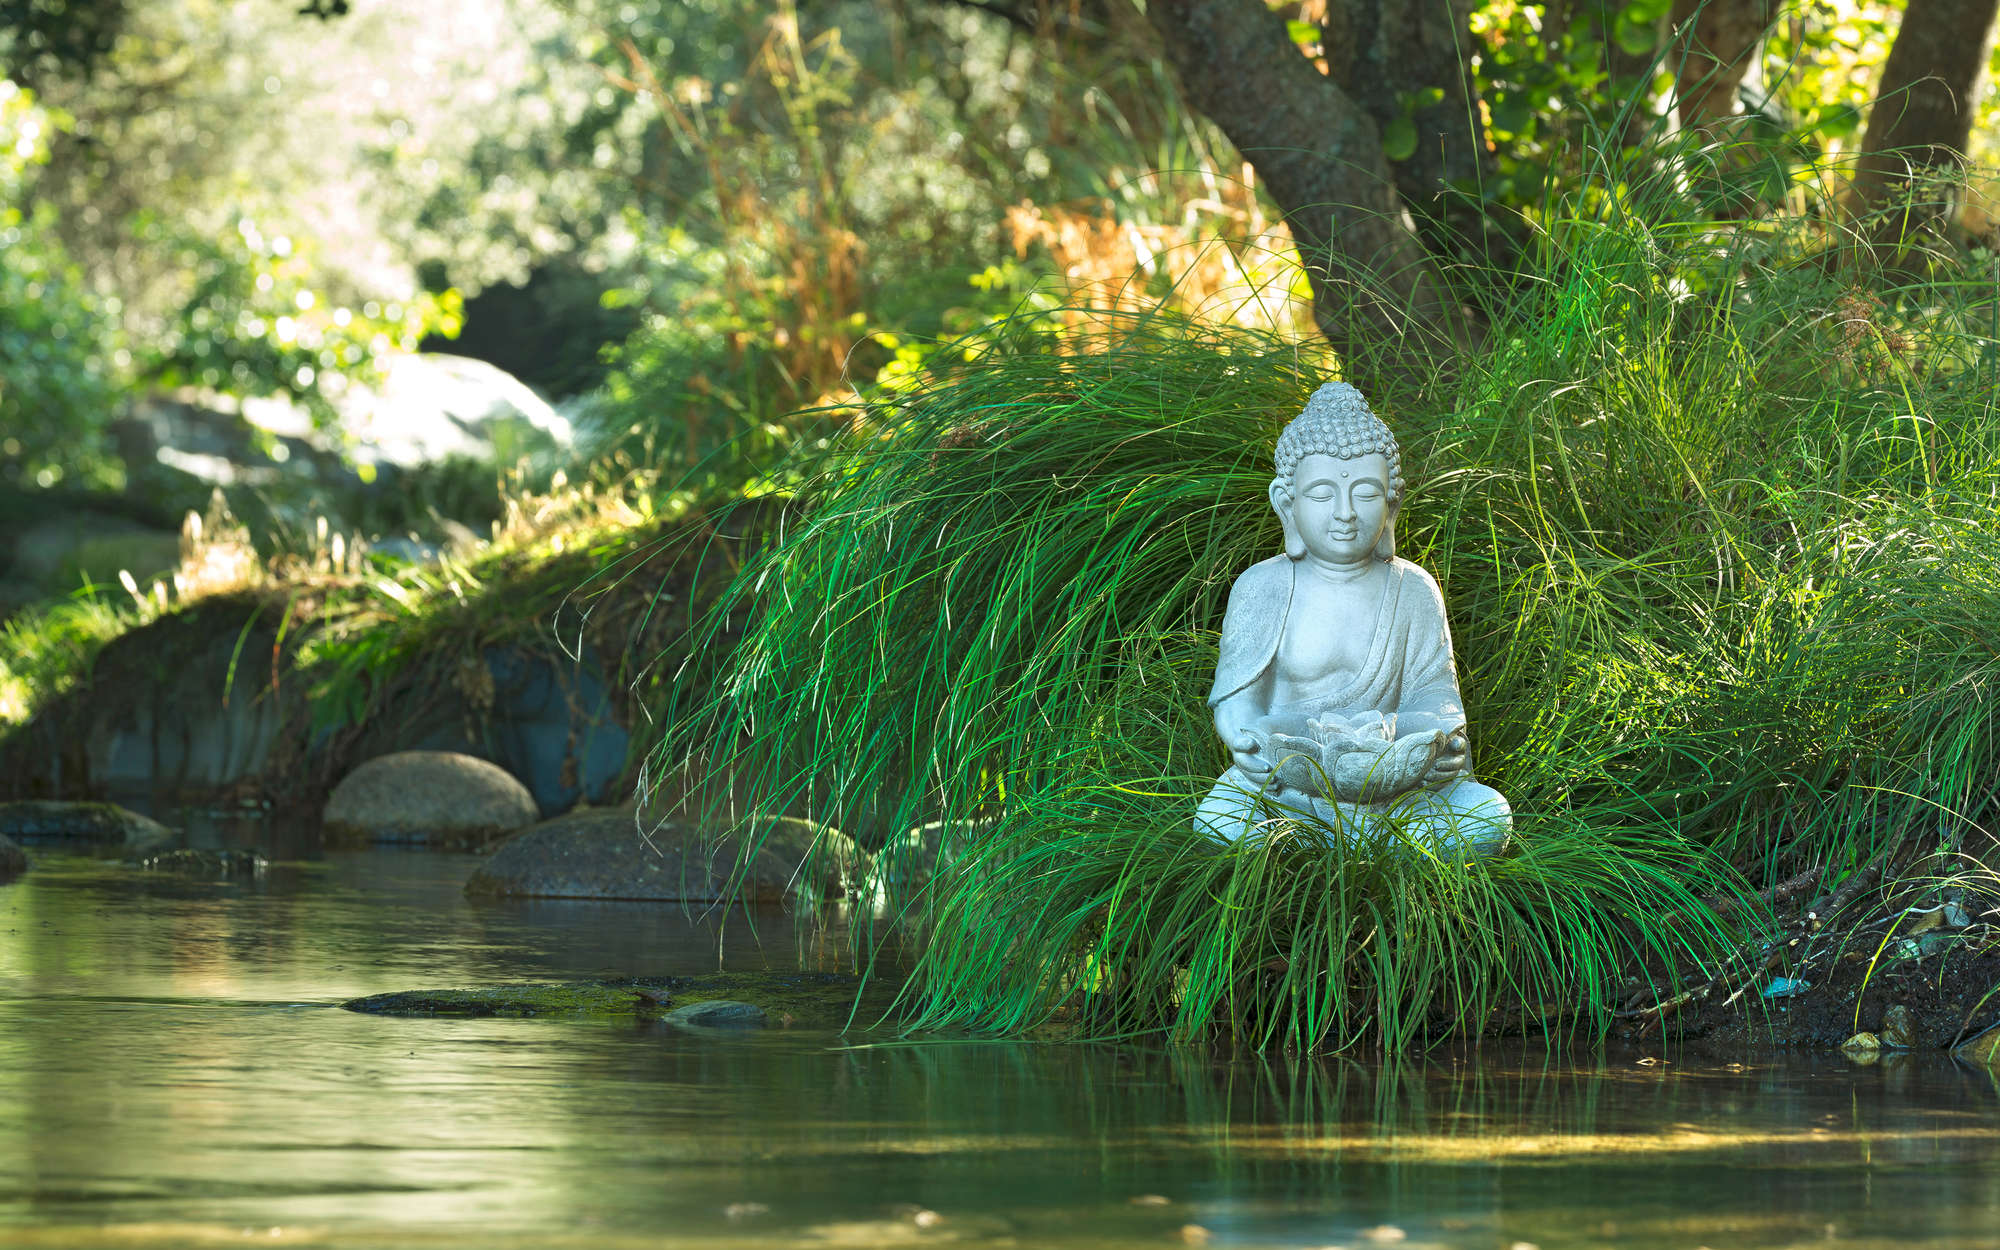             Fototapete Buddha-Statue am Flussufer – Perlmutt Glattvlies
        